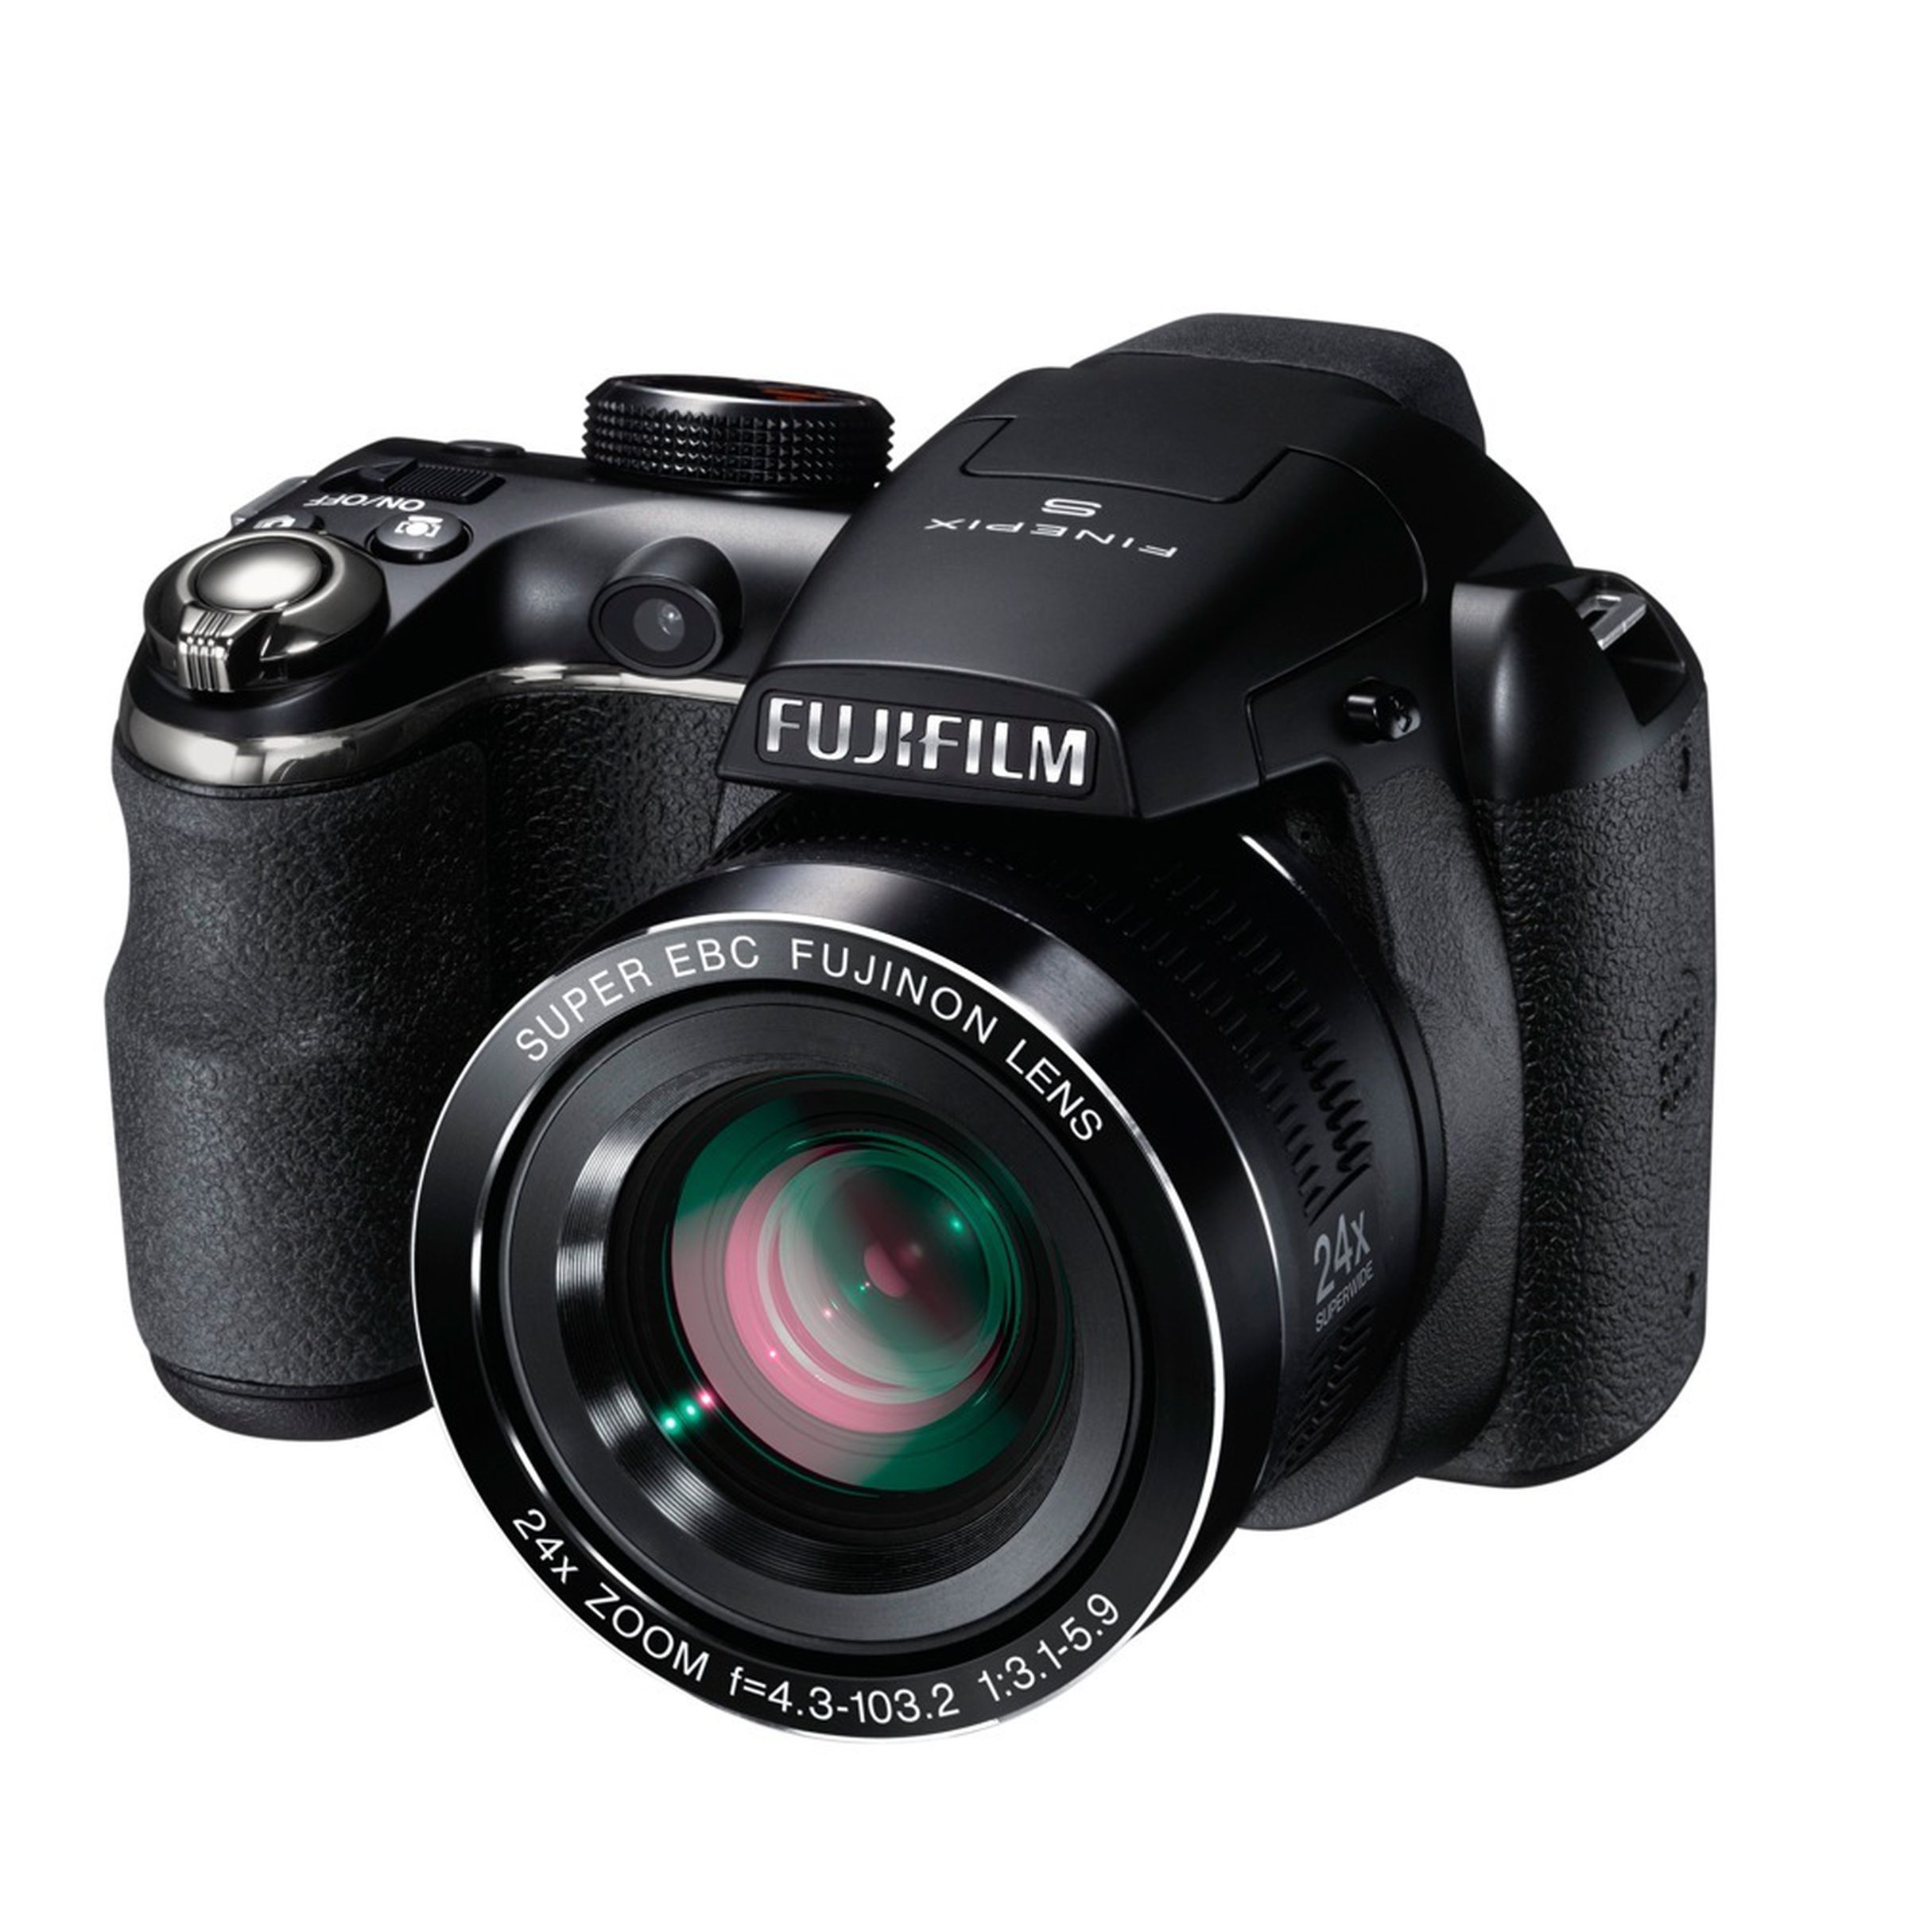 Fujifilm's 2012 camera lineup